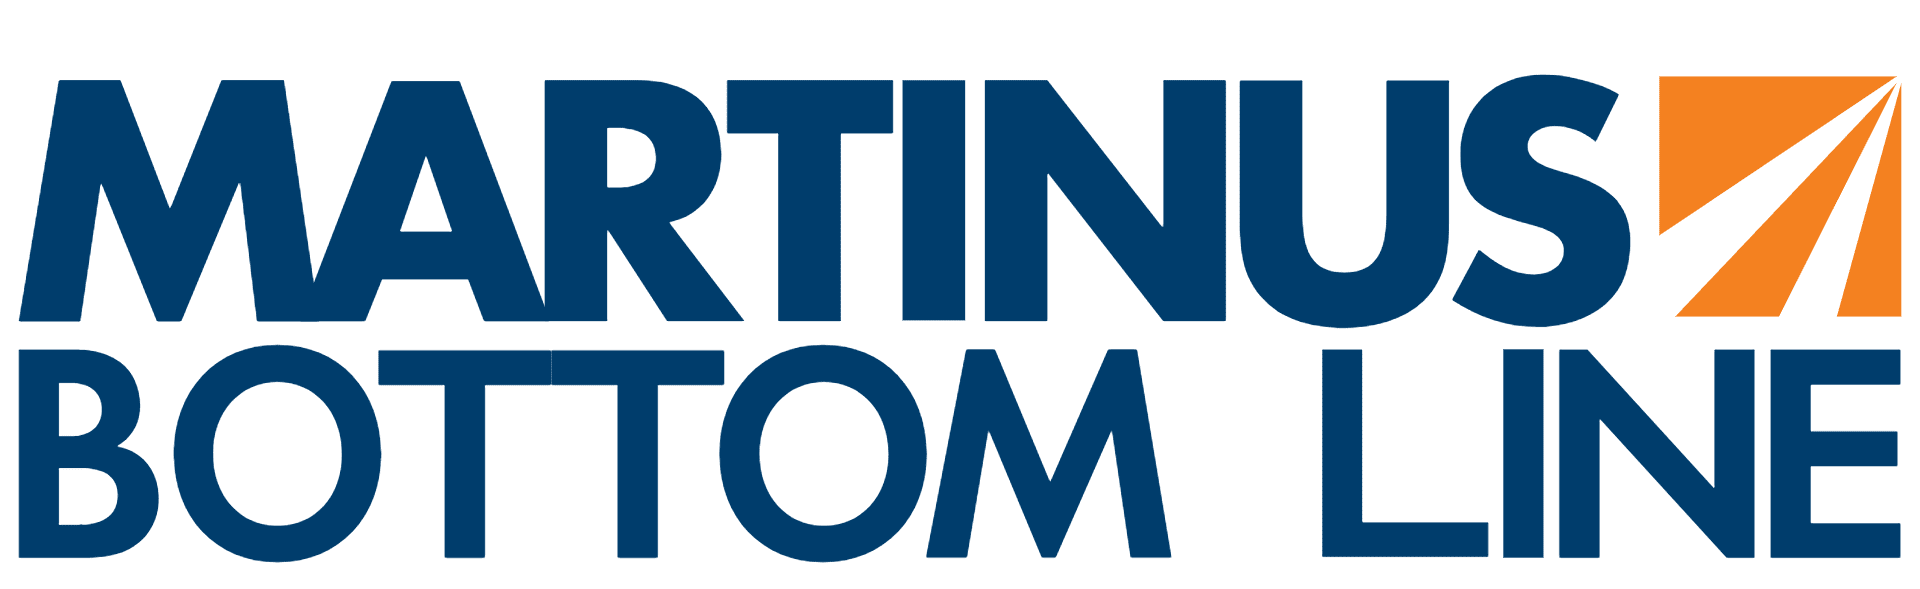 Martinus Bottom Line Company